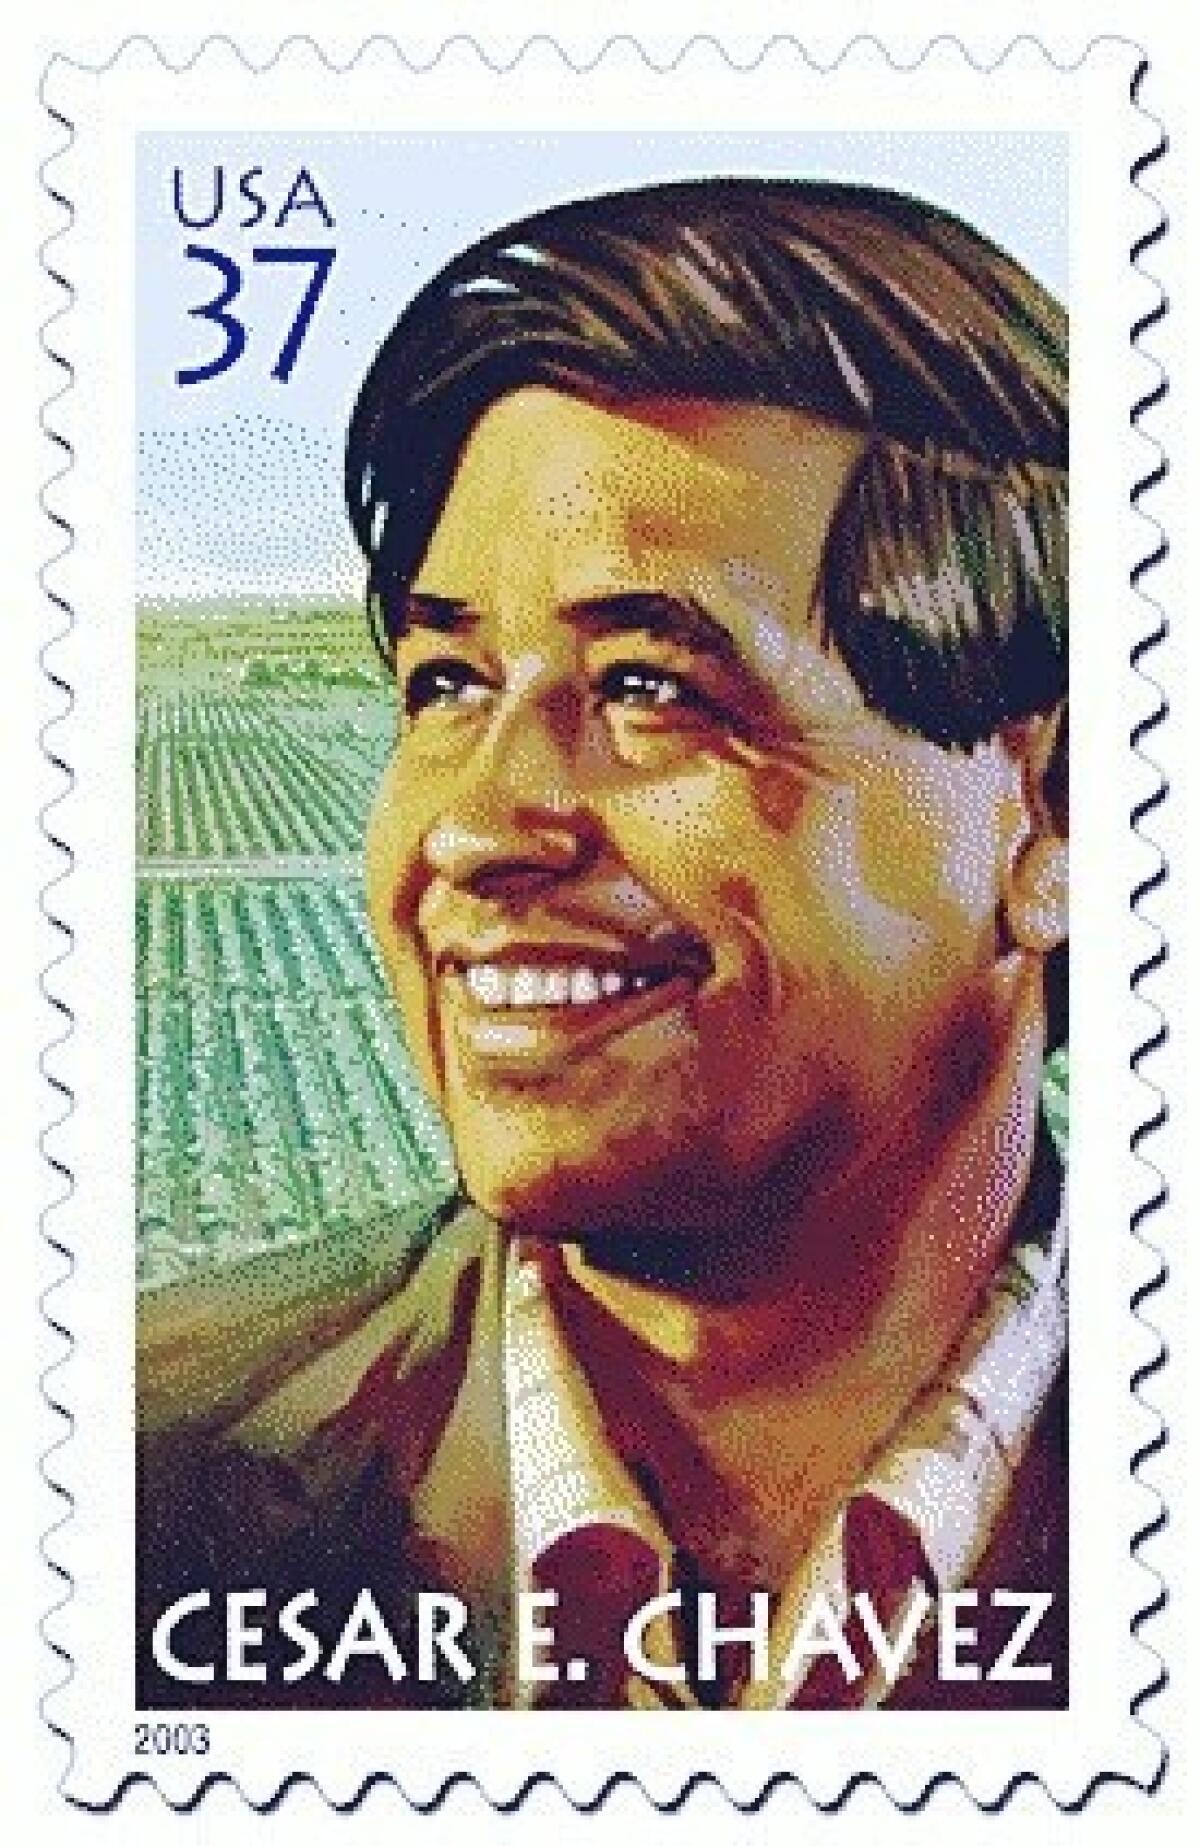 Cesar E. Chavez postage stamp